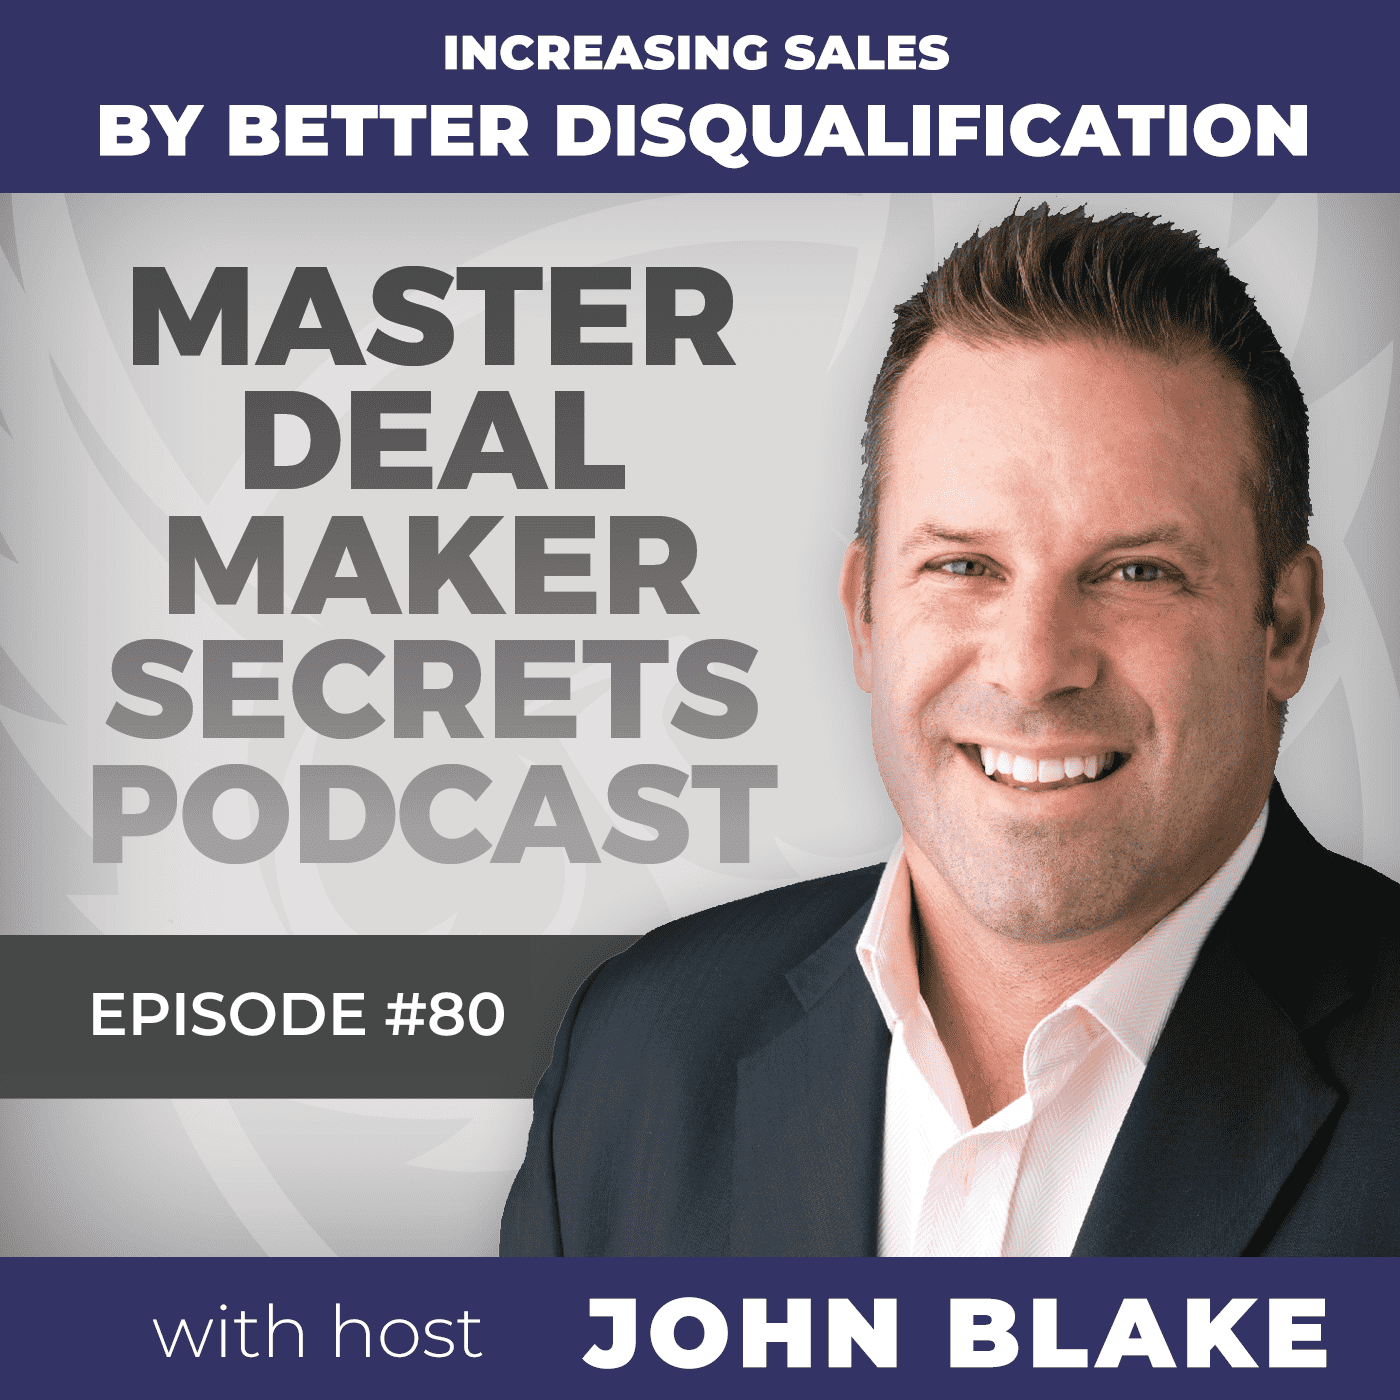 John Blake Increasing Sales by Better Disqualification